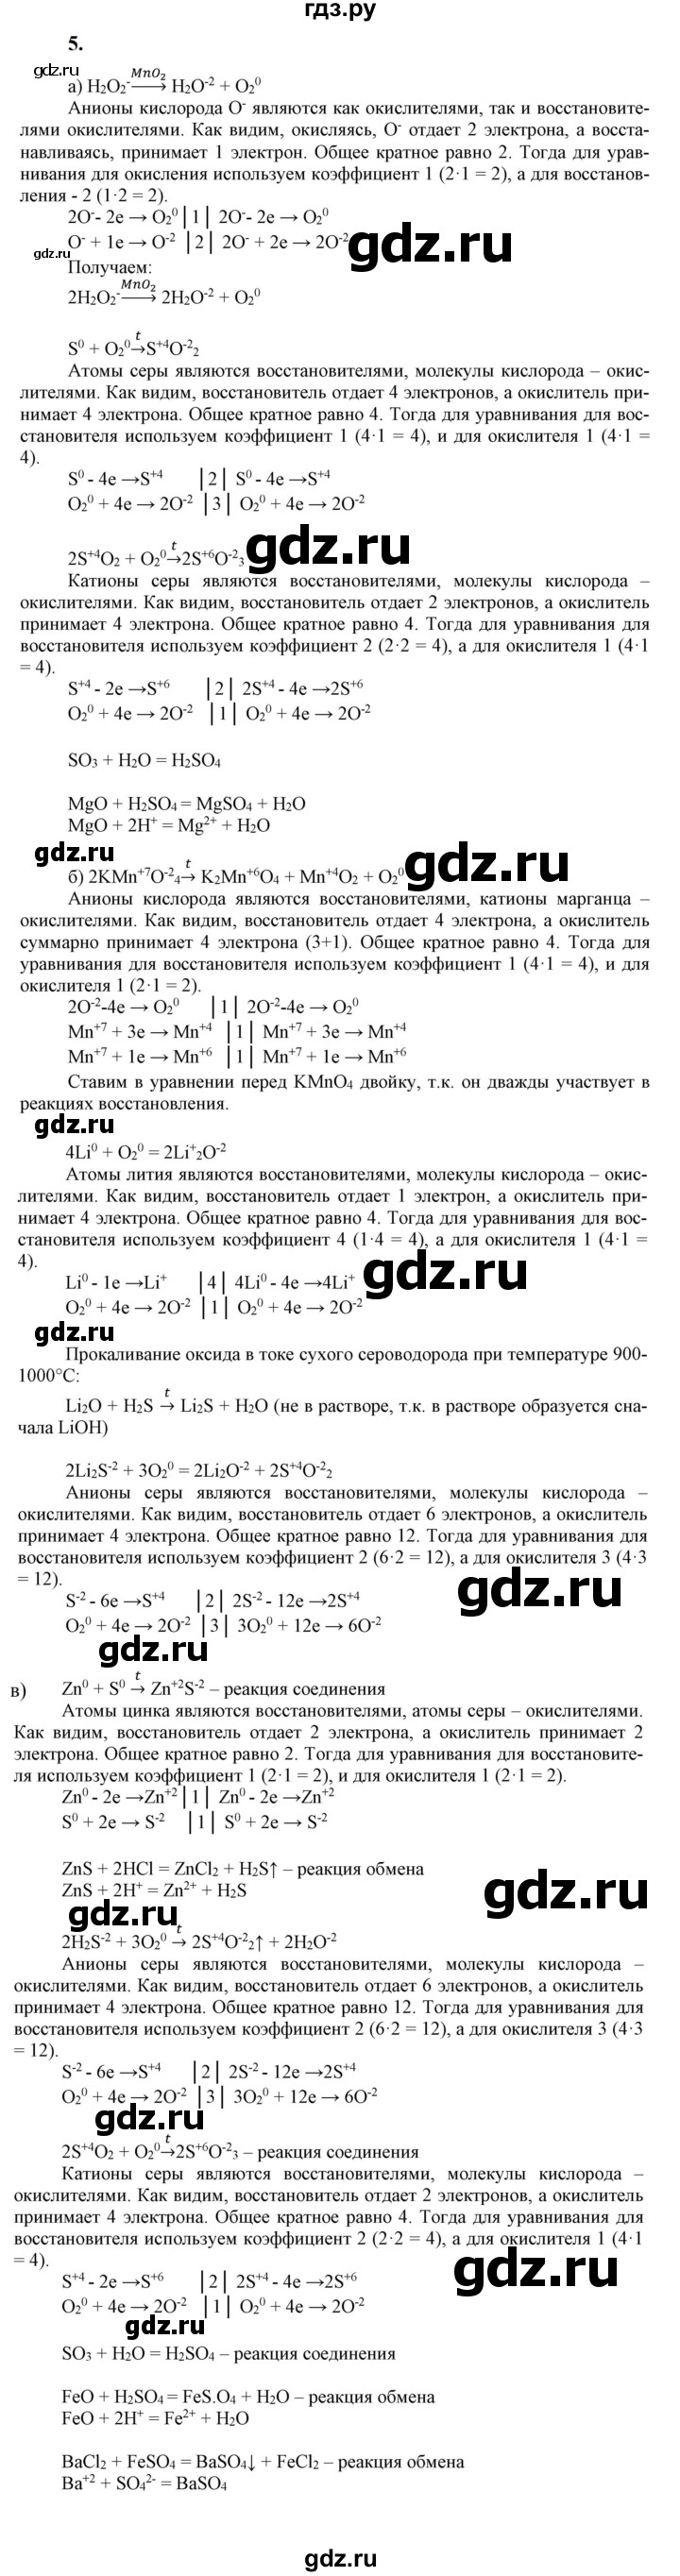 ГДЗ по химии 9 класс Габриелян   §13 - 5, Решебник №1